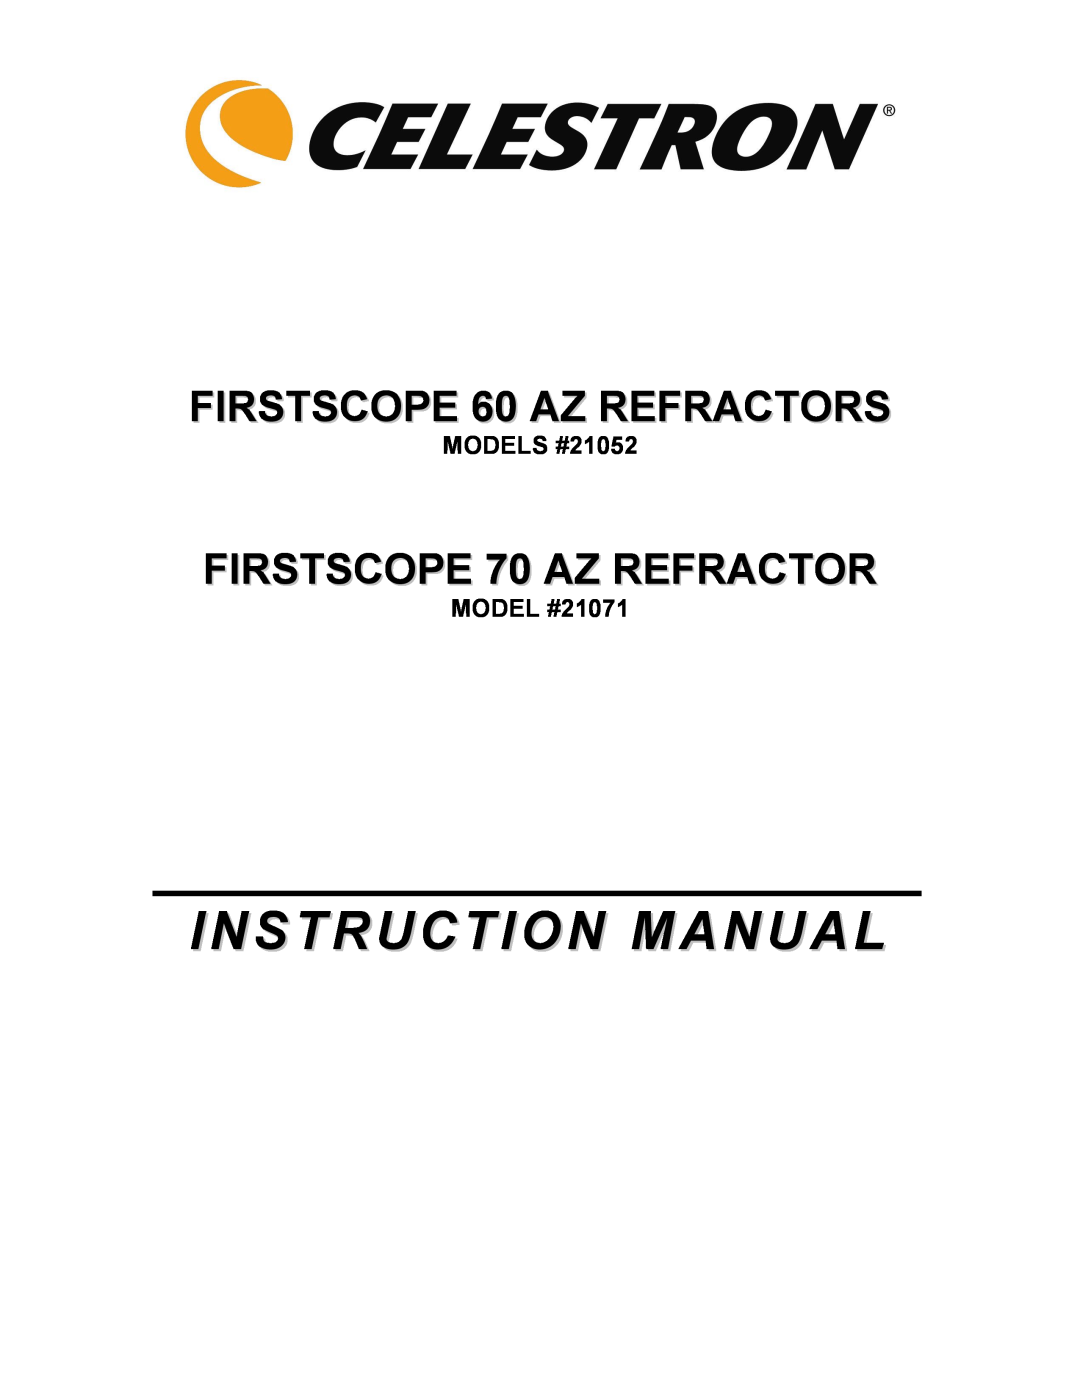 Celestron manual FIRSTSCOPE 60 AZ REFRACTORS, FIRSTSCOPE 70 AZ REFRACTOR, MODELS #21052, MODEL #21071 